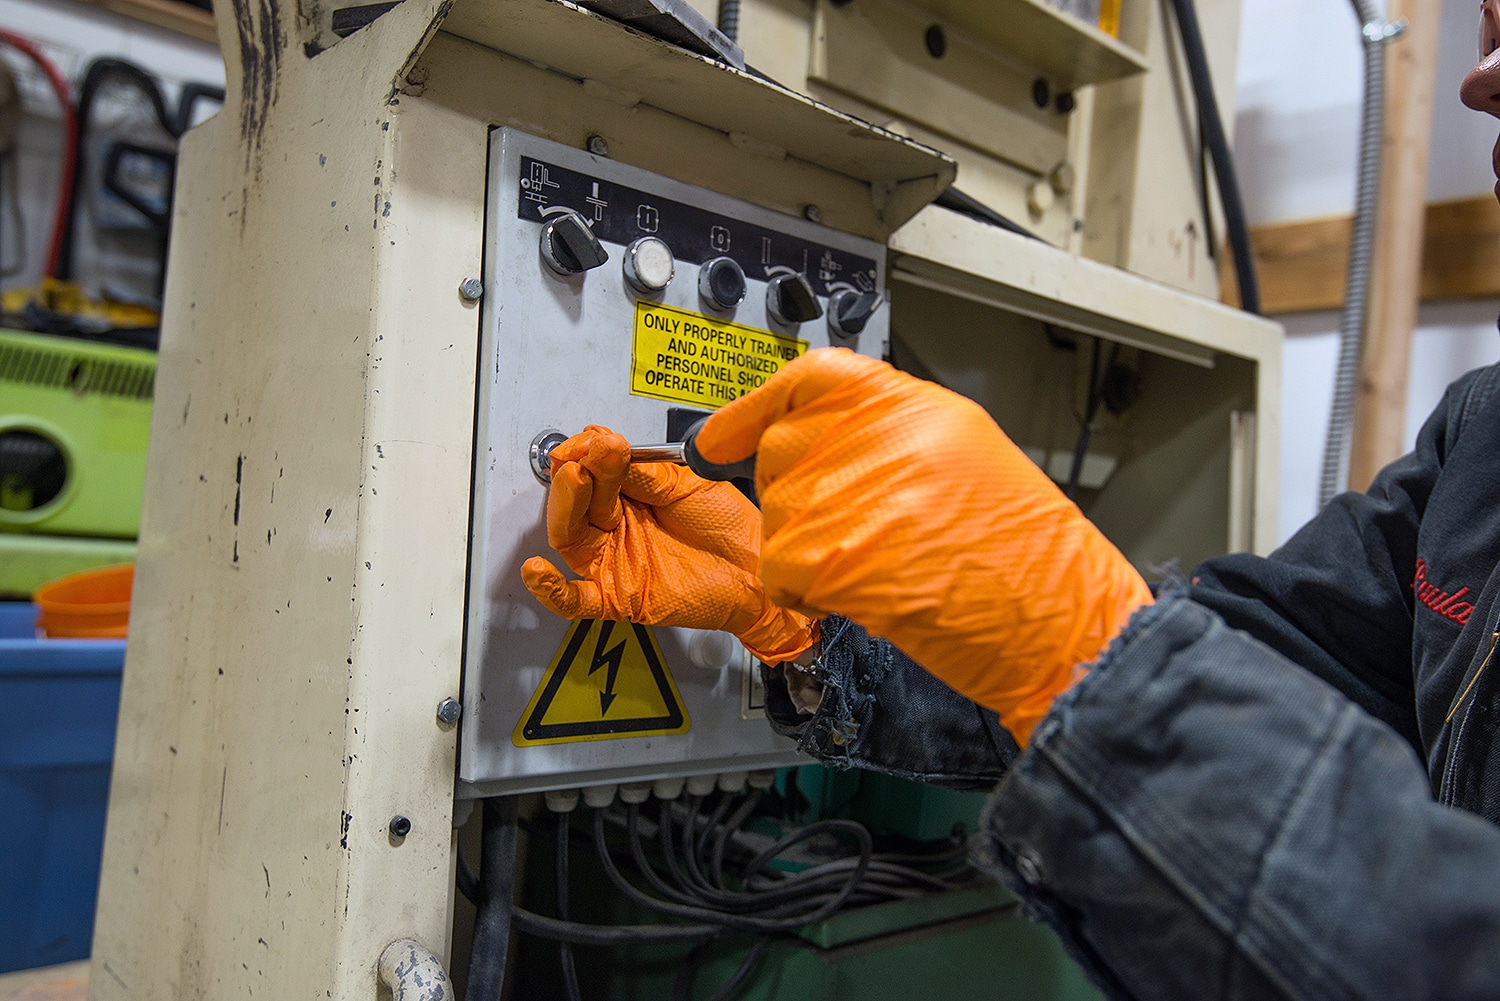 A worker wearing orange nitrile gloves from Gloveworks adjusts a machine.